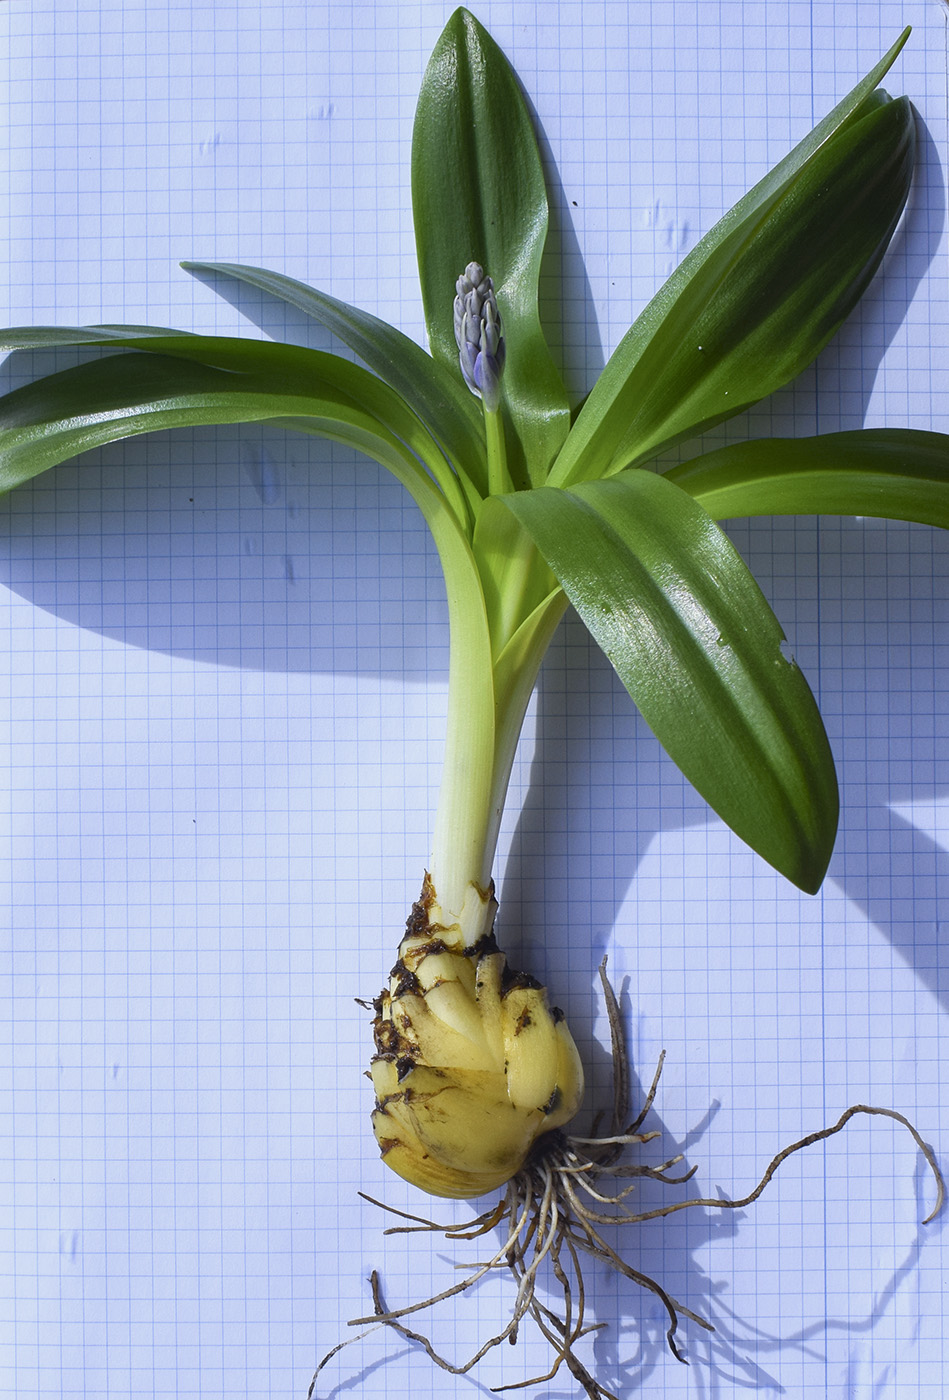 Image of Scilla lilio-hyacinthus specimen.